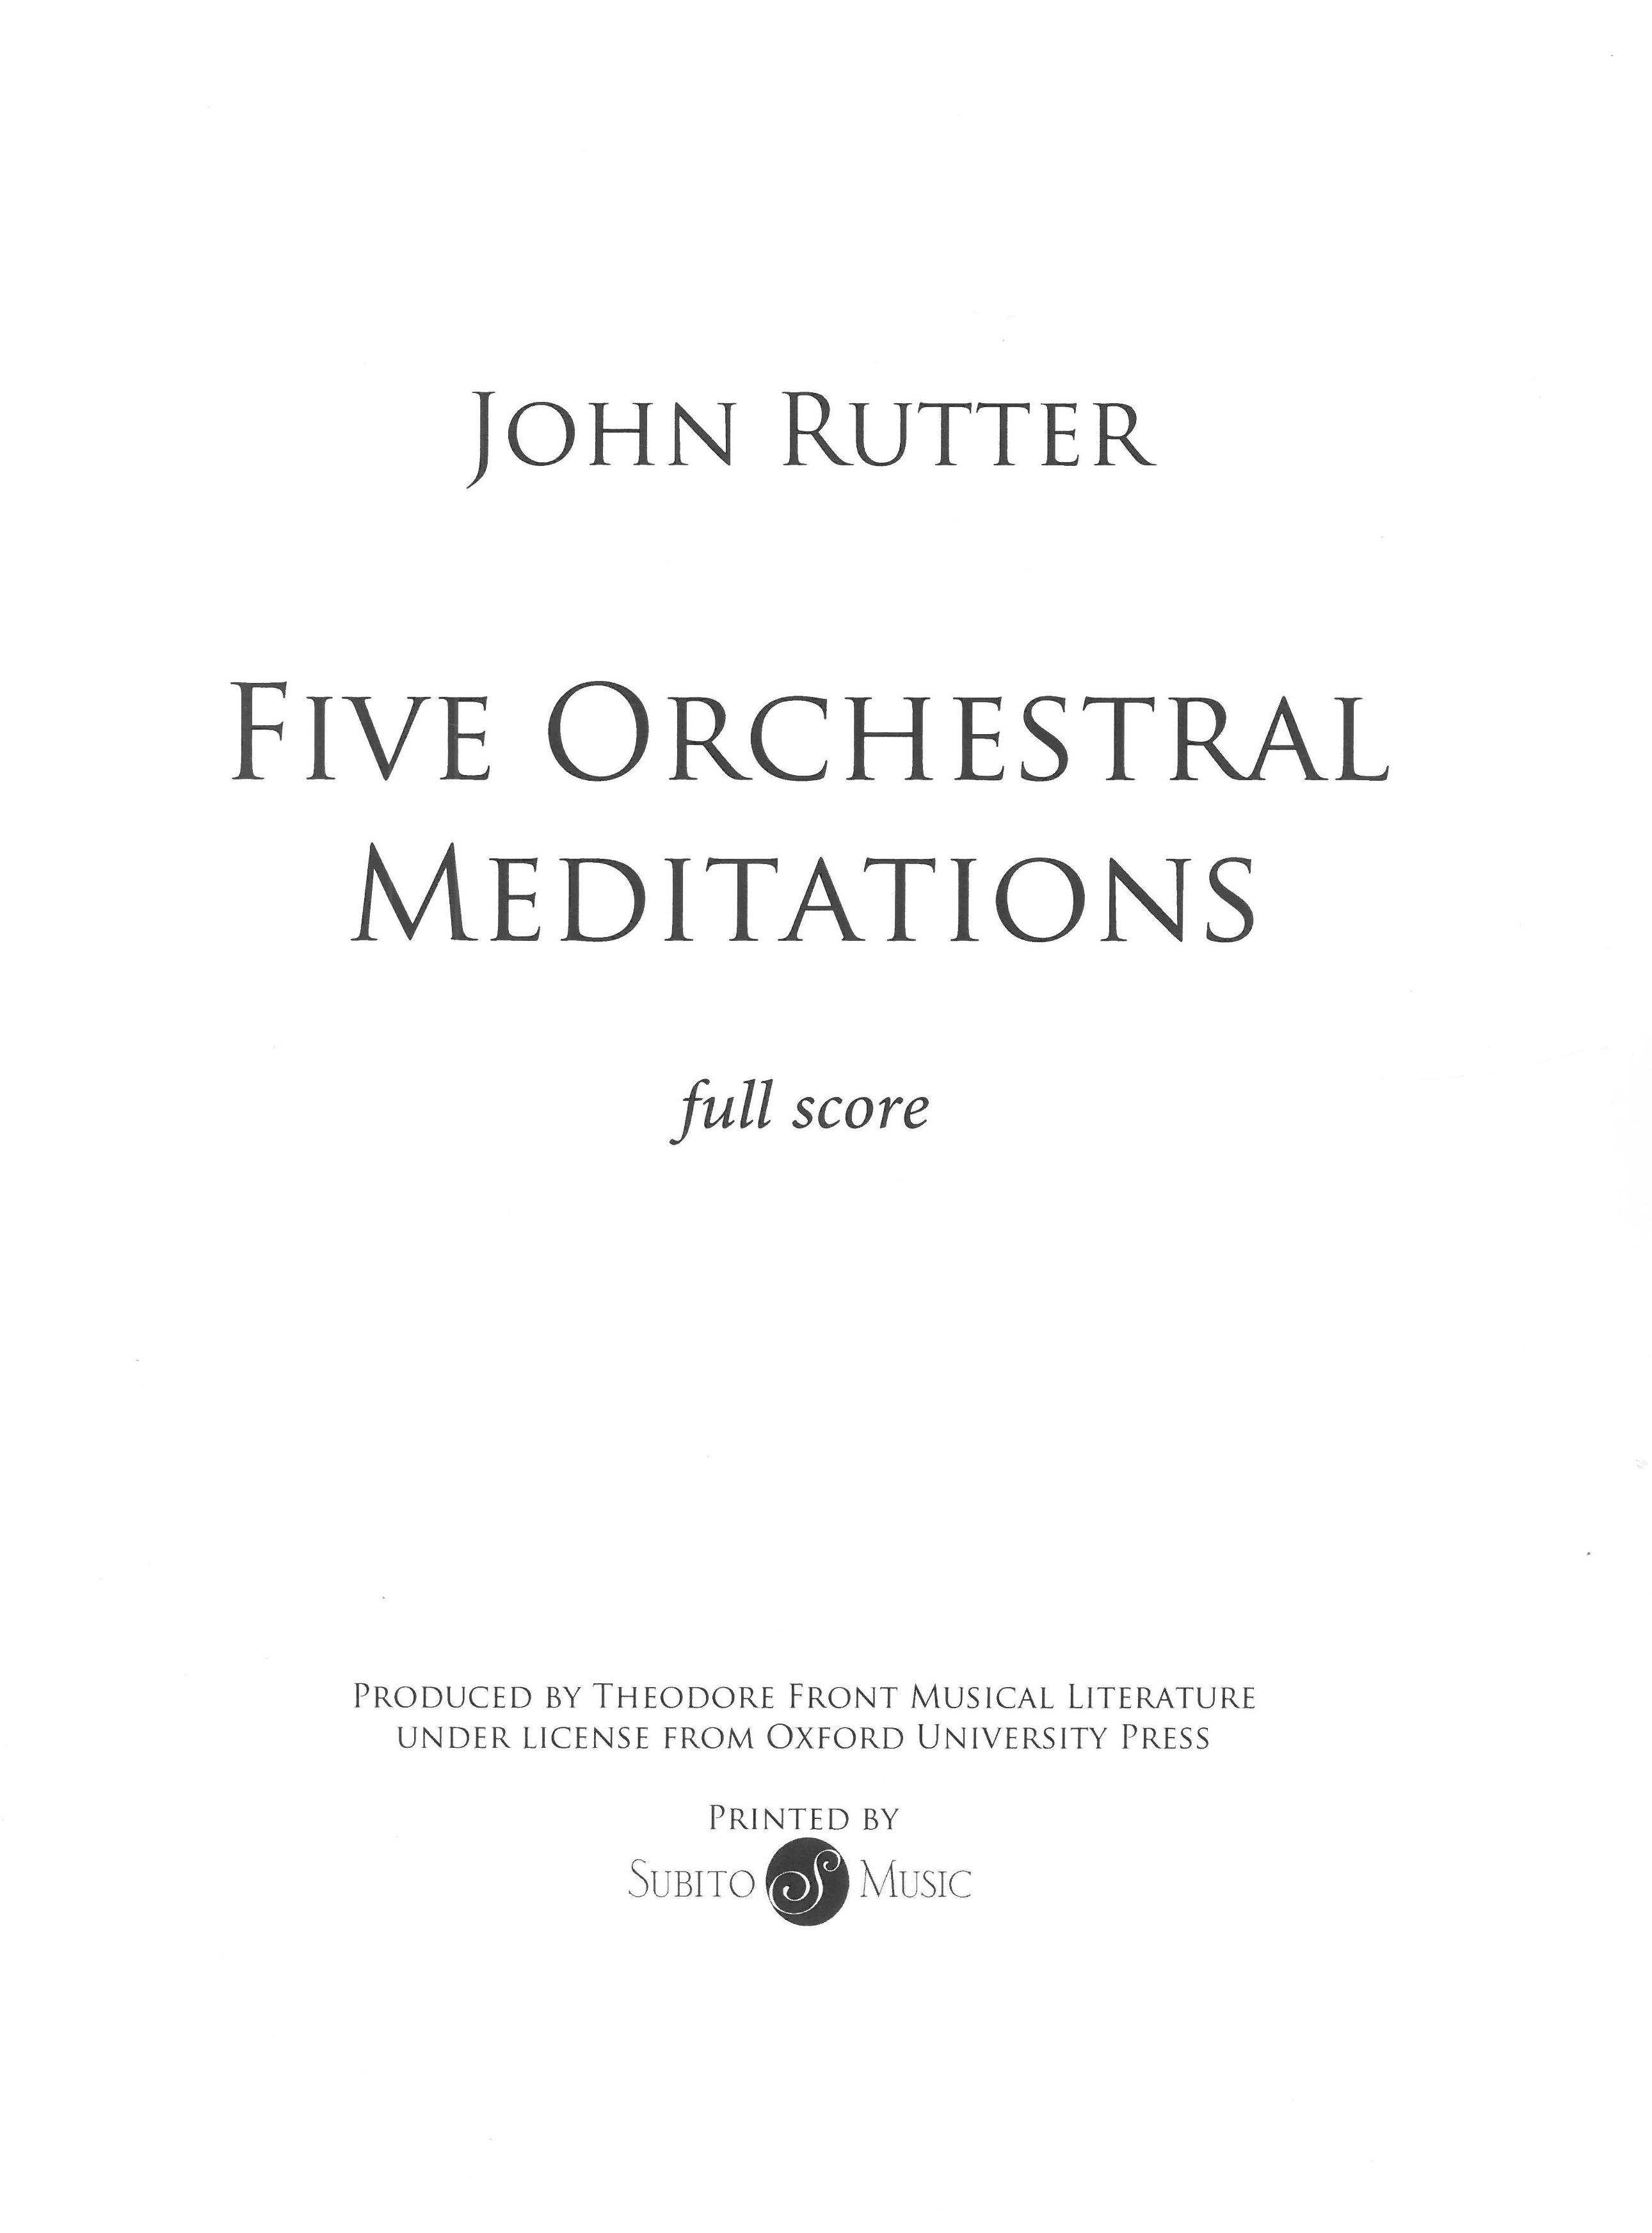 Five Orchestral Meditations.